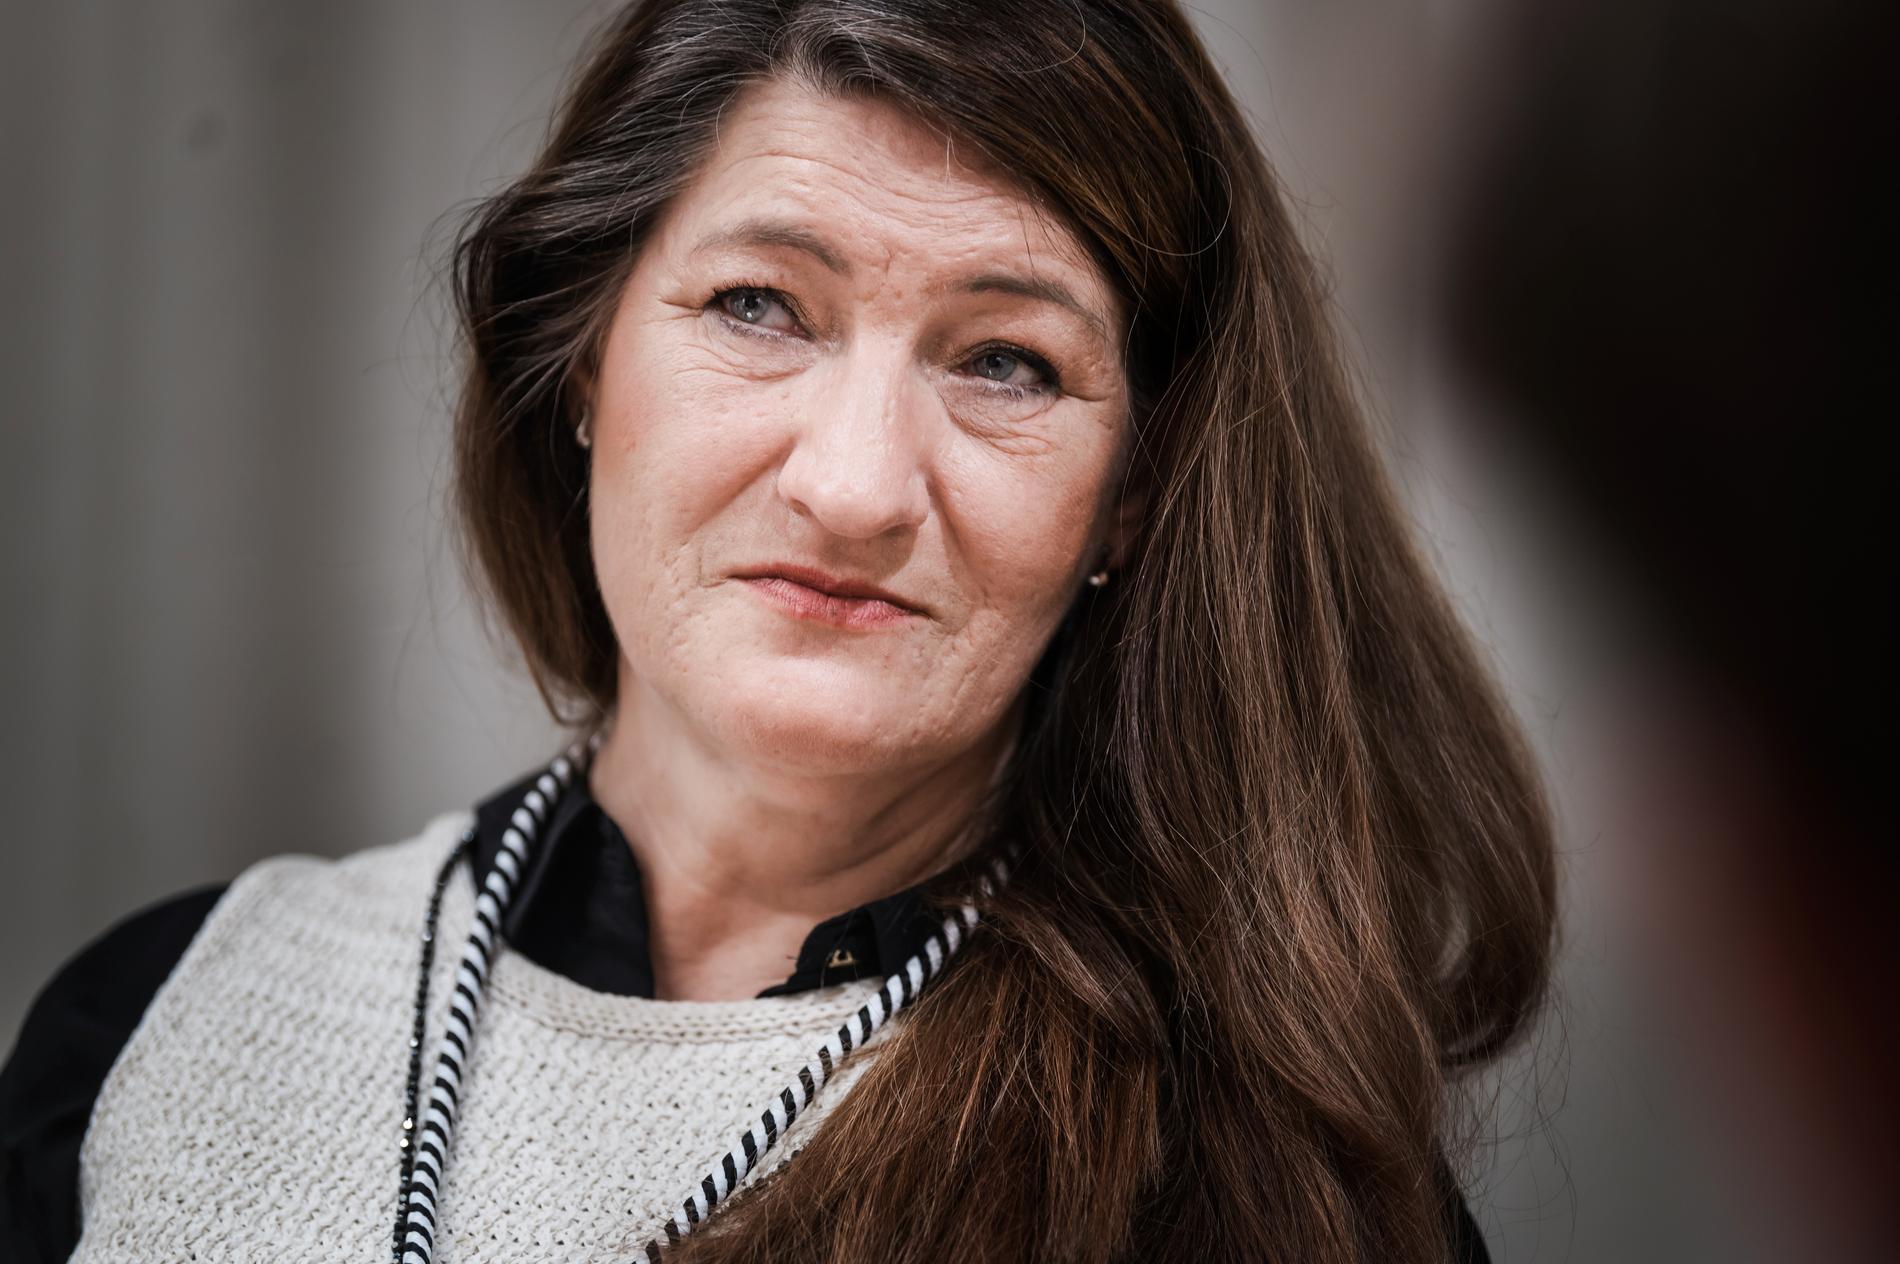 Susanna Gideonsson, ordförande för LO. Arkivbild.